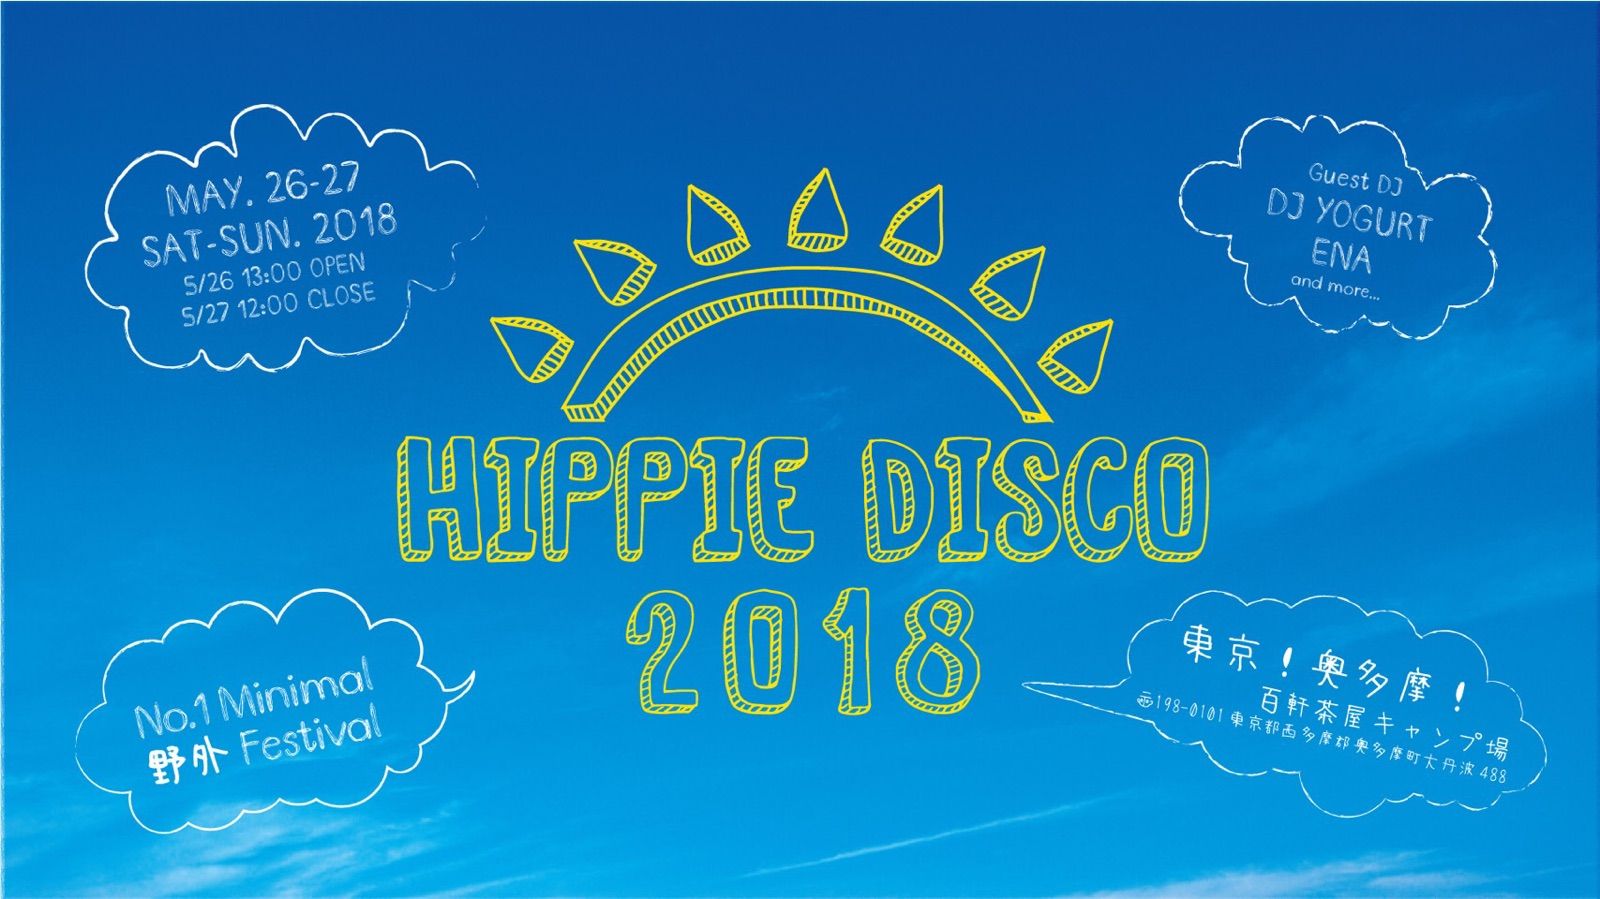 Hippie Disco 2018